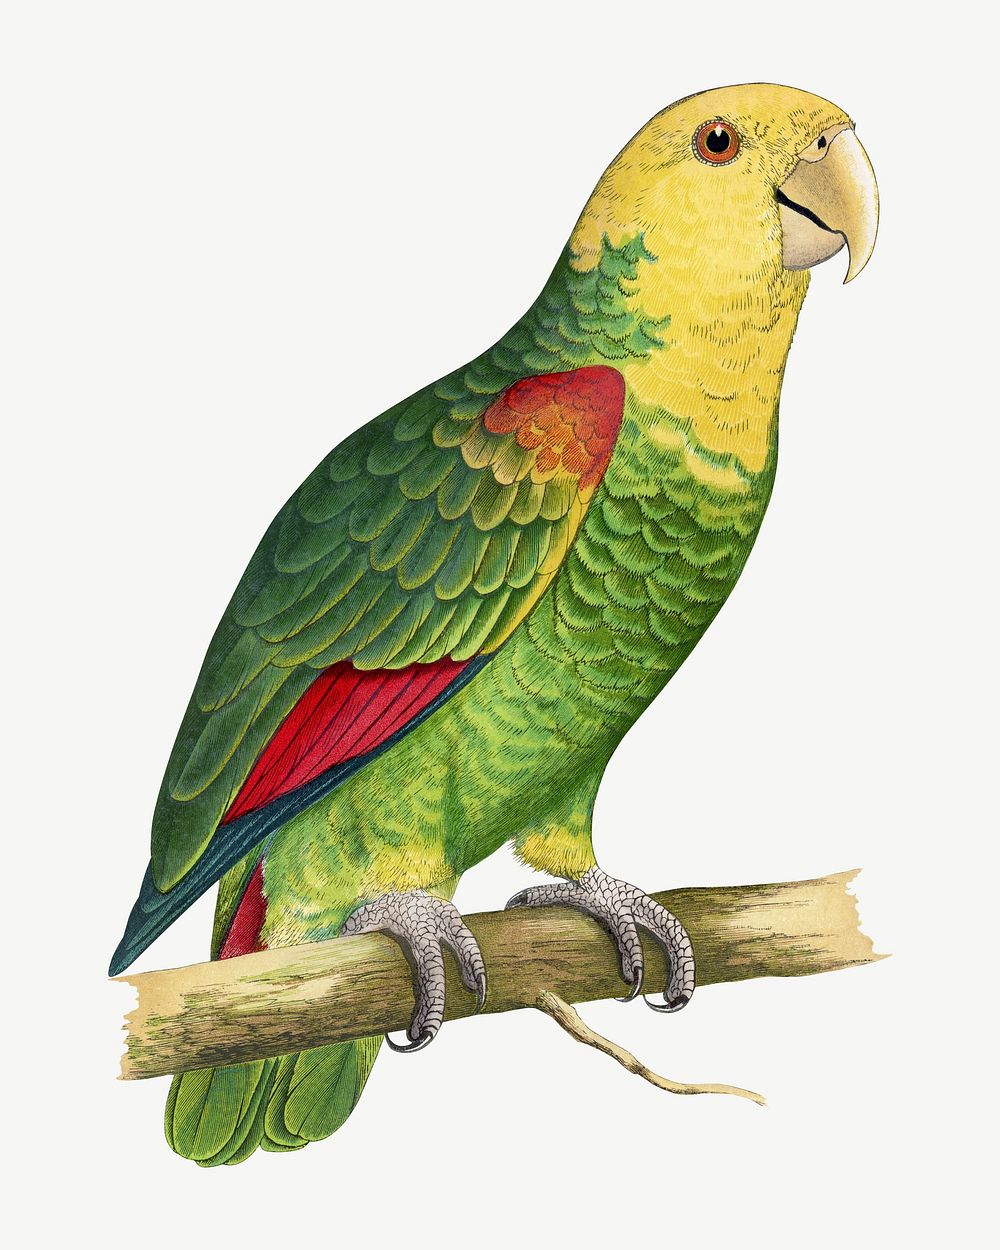 Le Vaillant's Amazon, vintage bird illustration psd. Remixed by rawpixel.